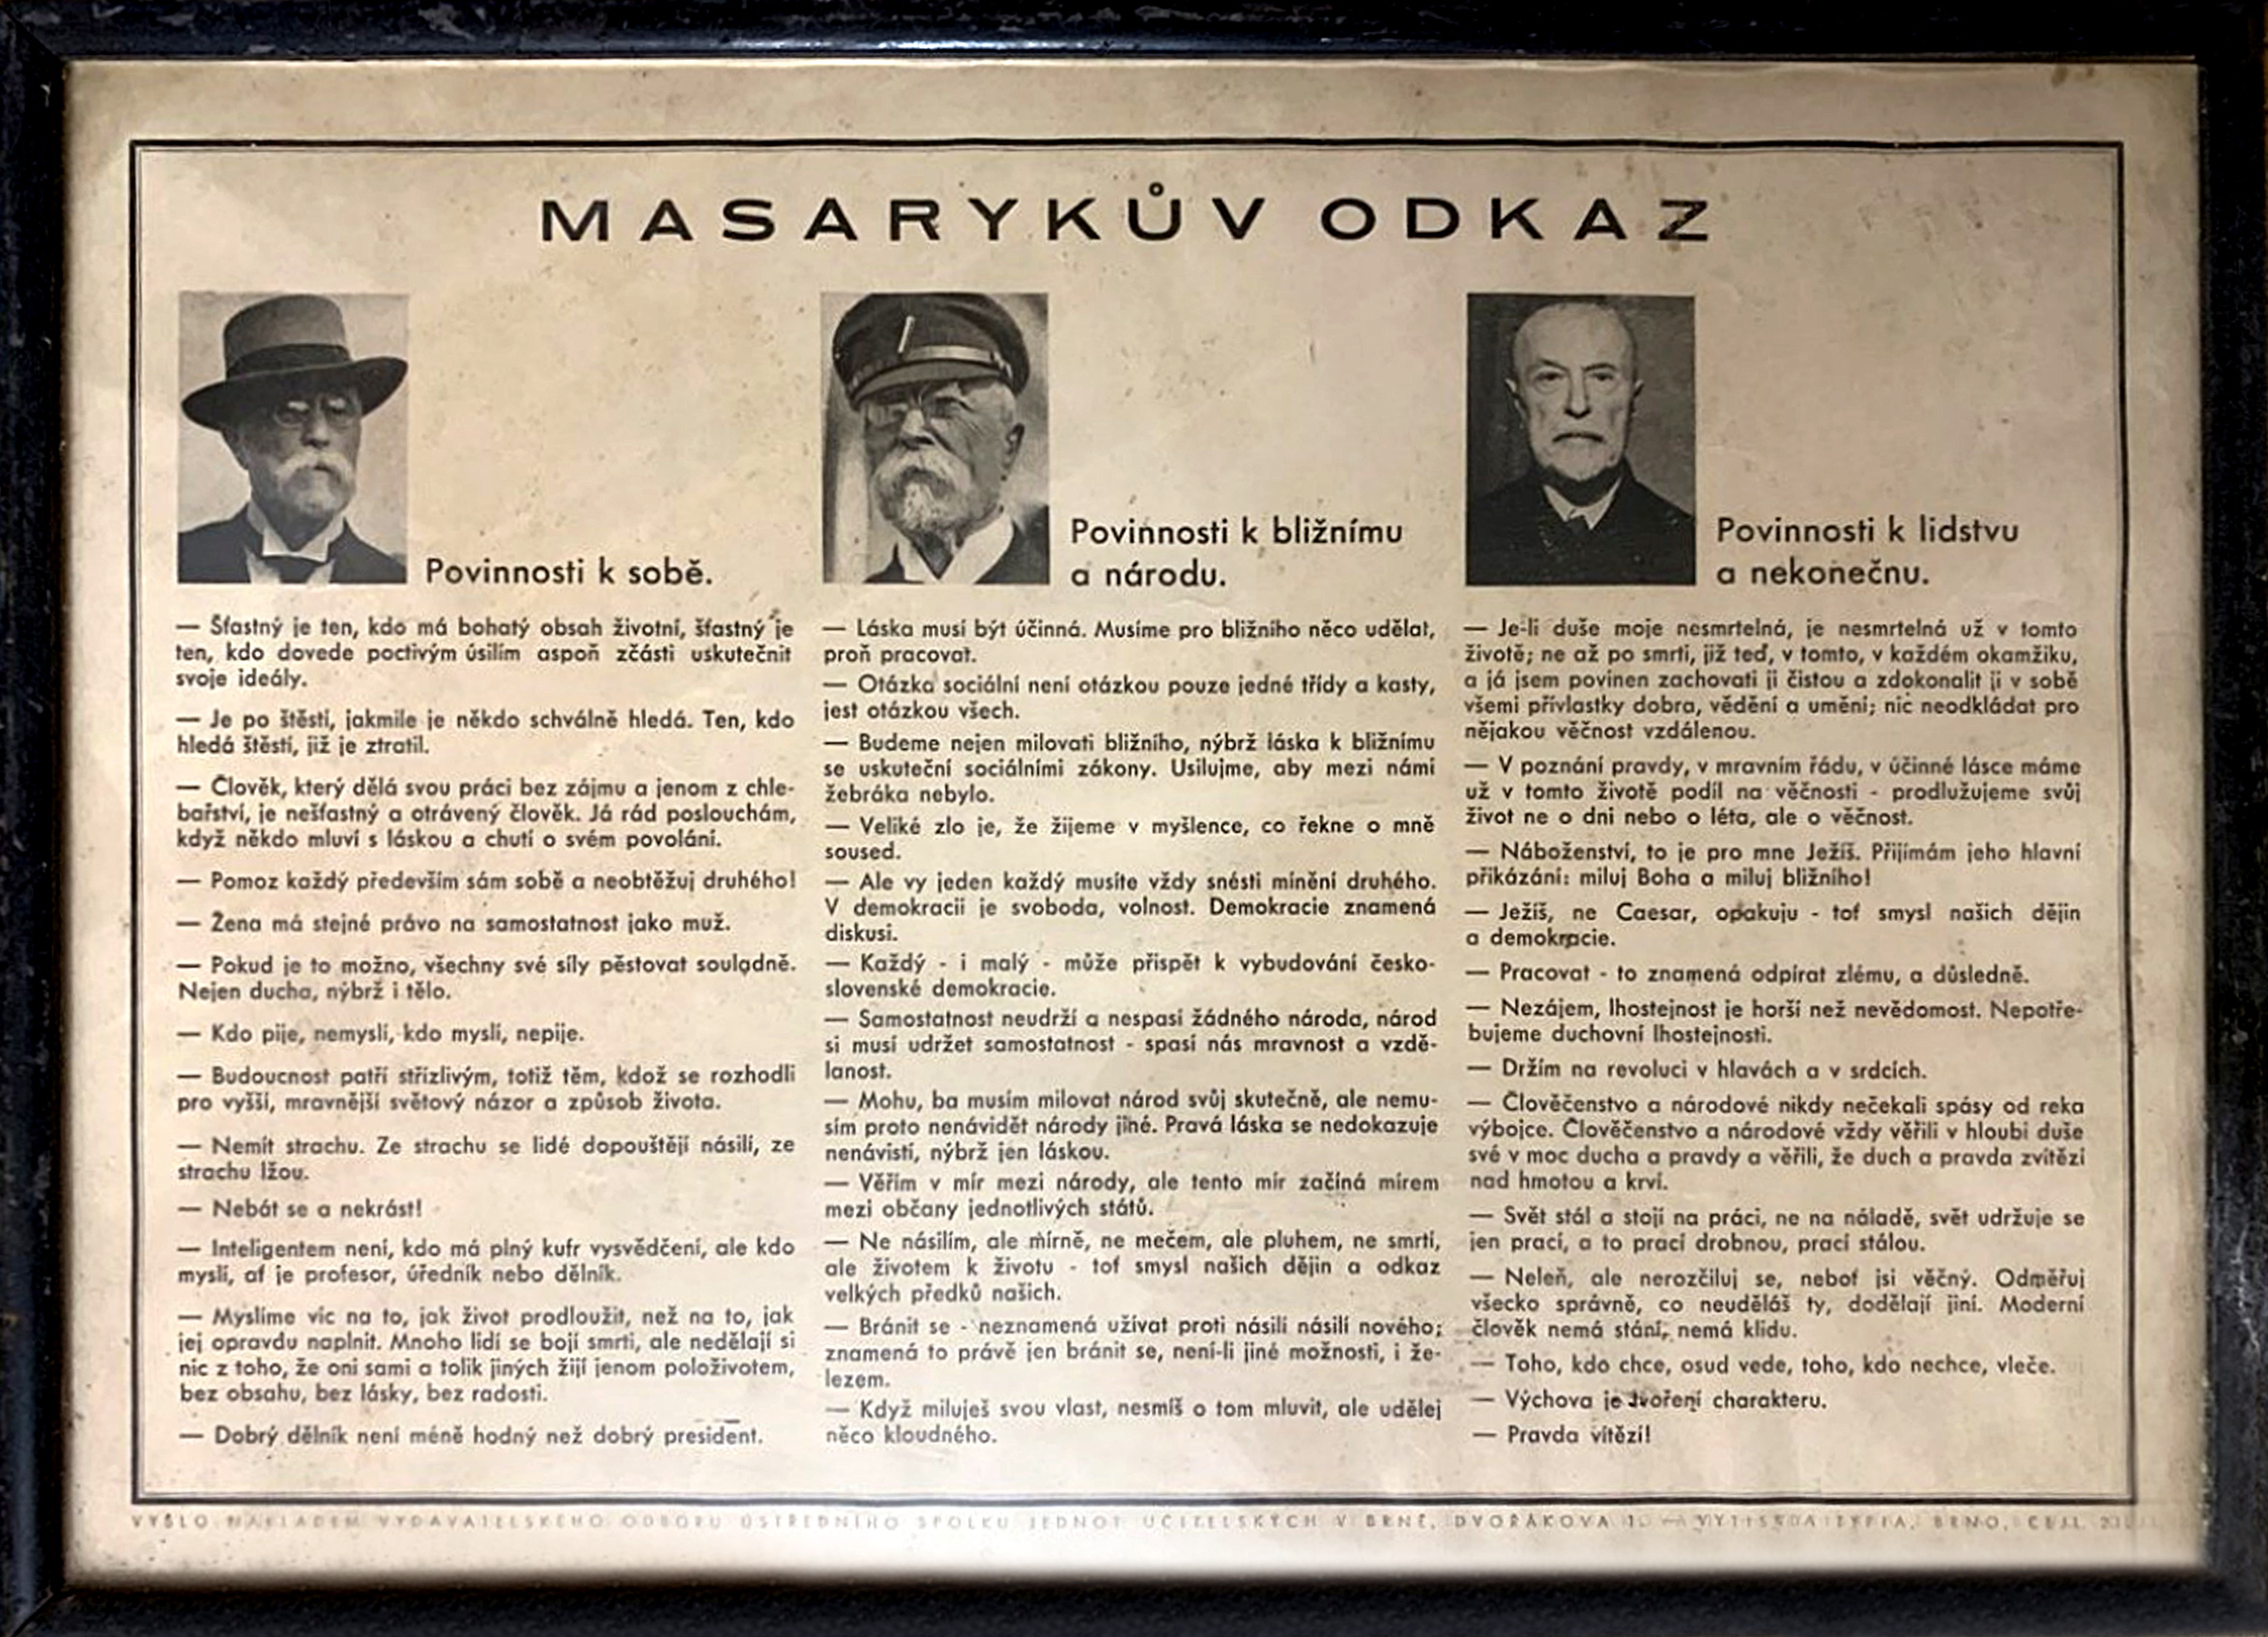 Masarykův odkaz